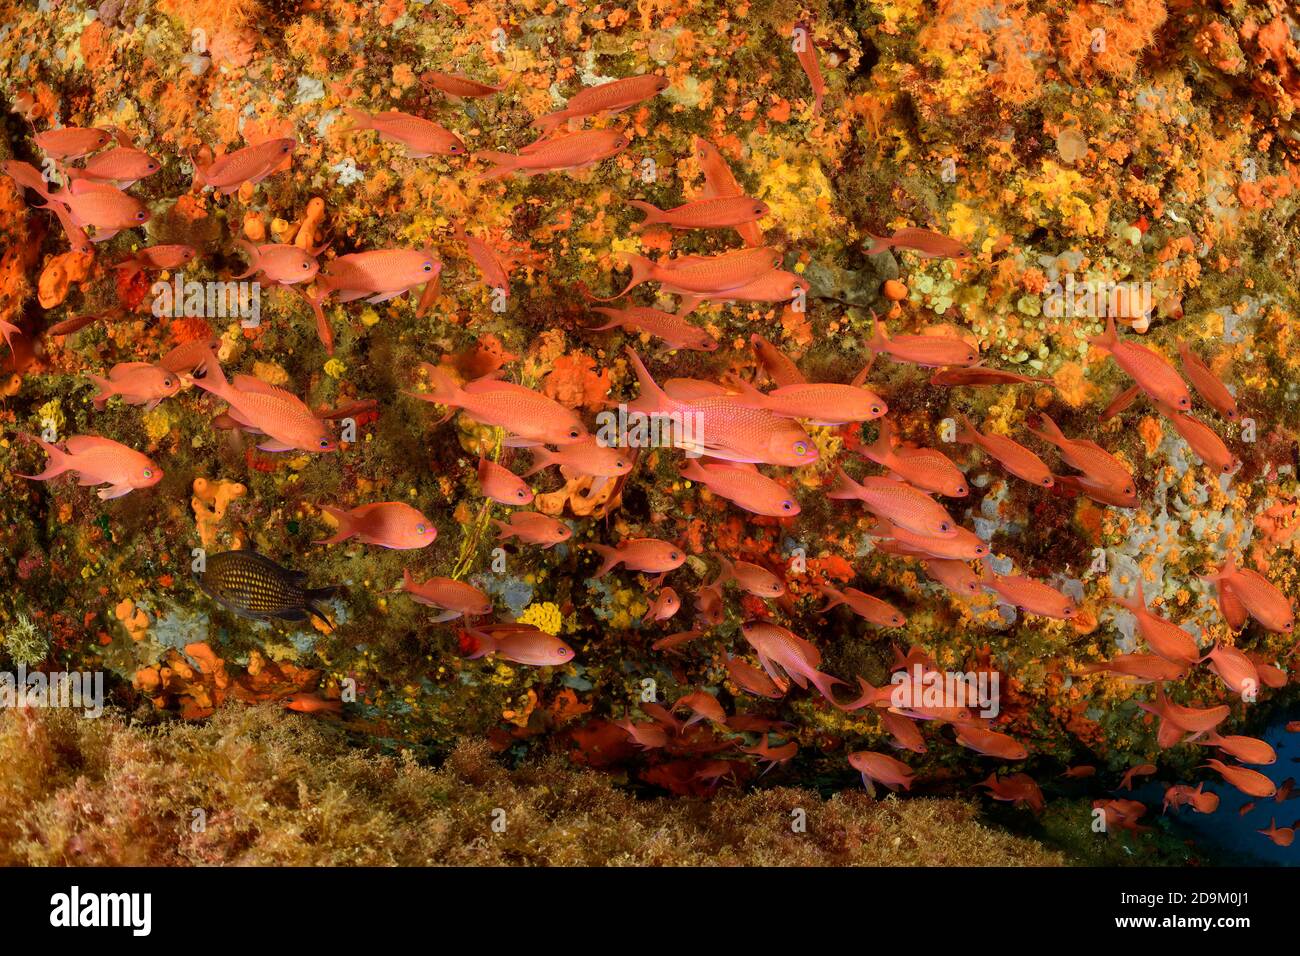 Anthias in the coral reef with anemones, Anthias anthias, Tamariu, Costa Brava, Spain, Mediterranean Stock Photo